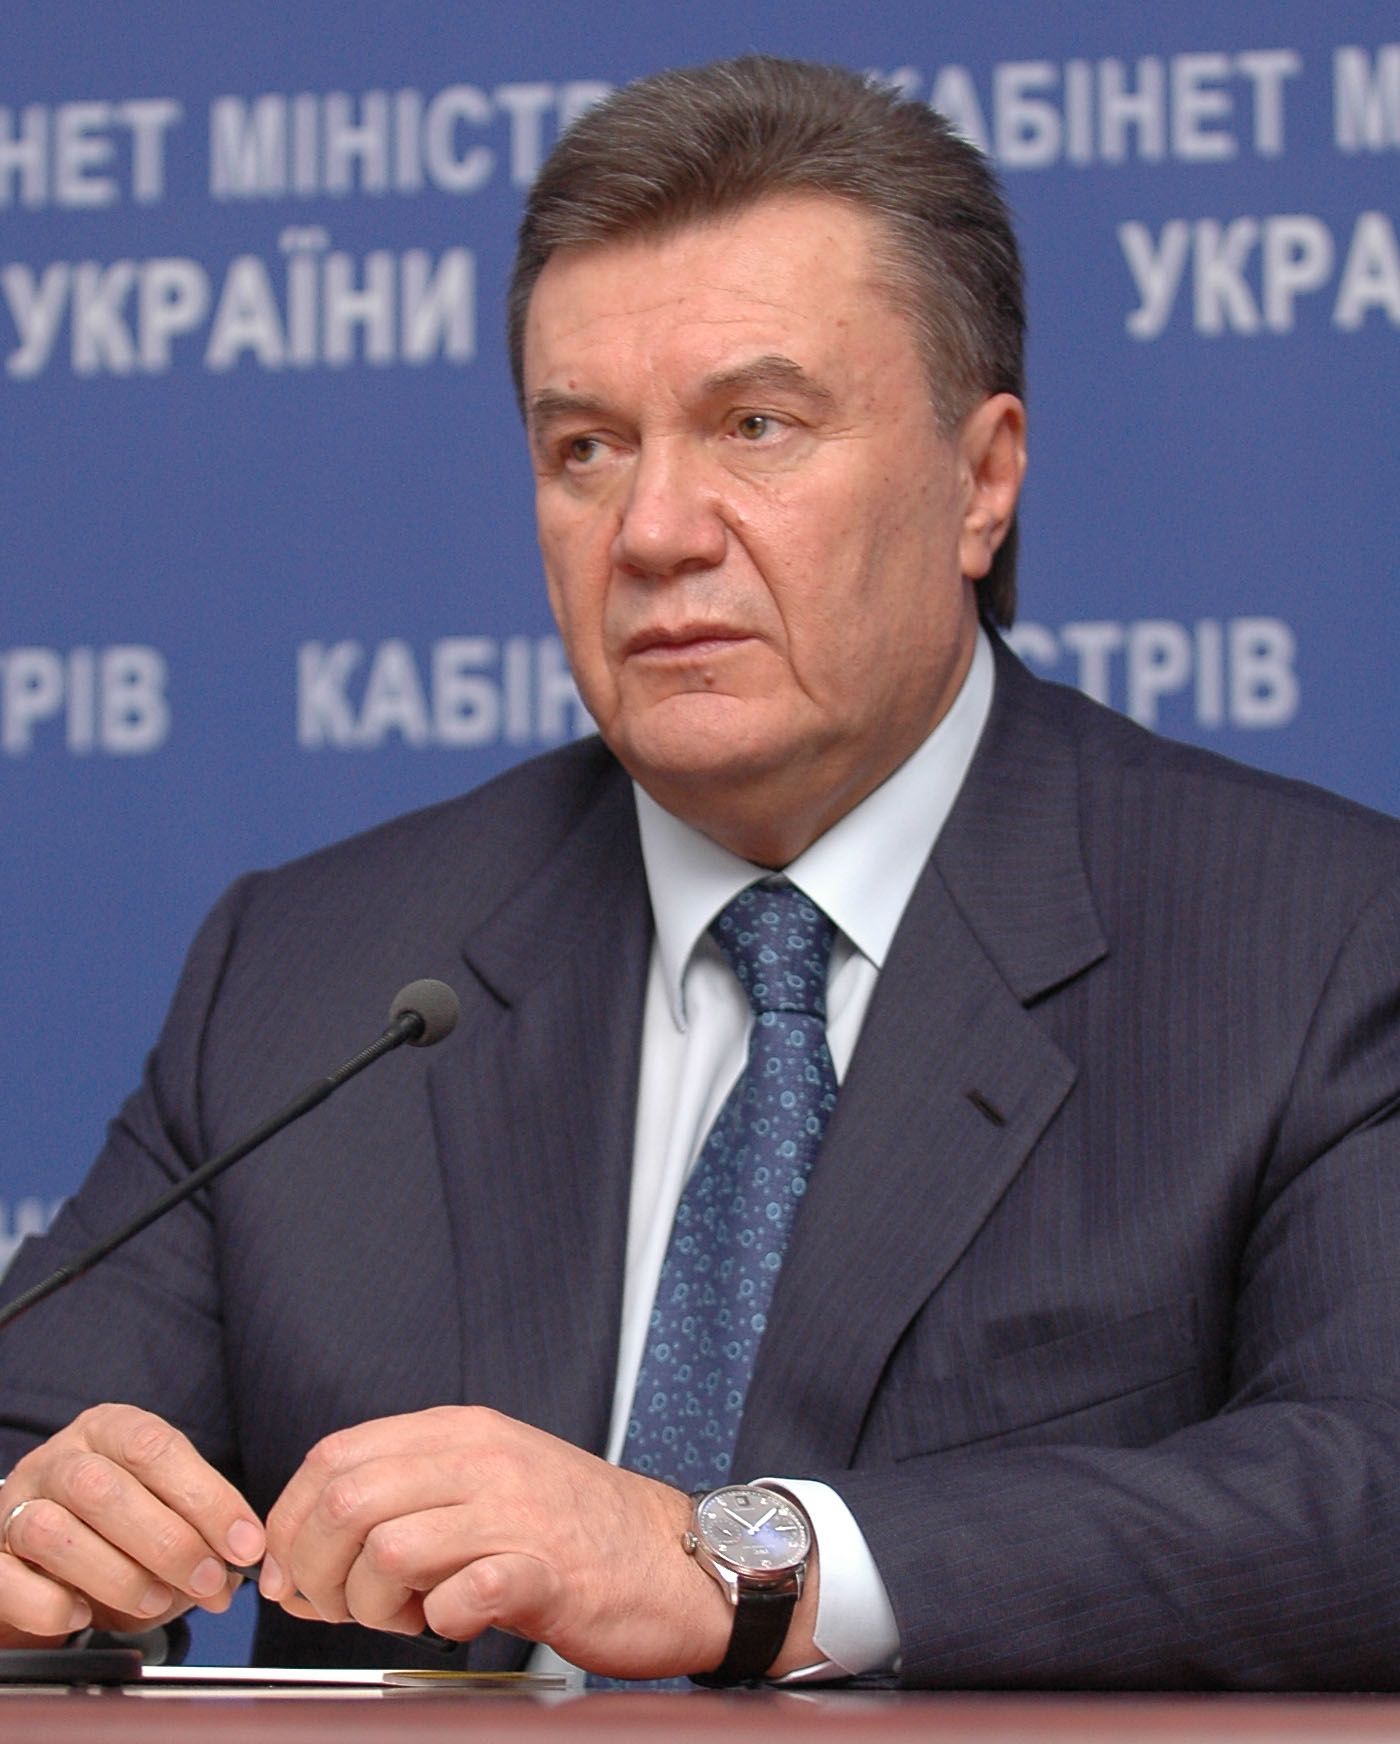 Viktor Yanukovych © Review News/Shutterstock